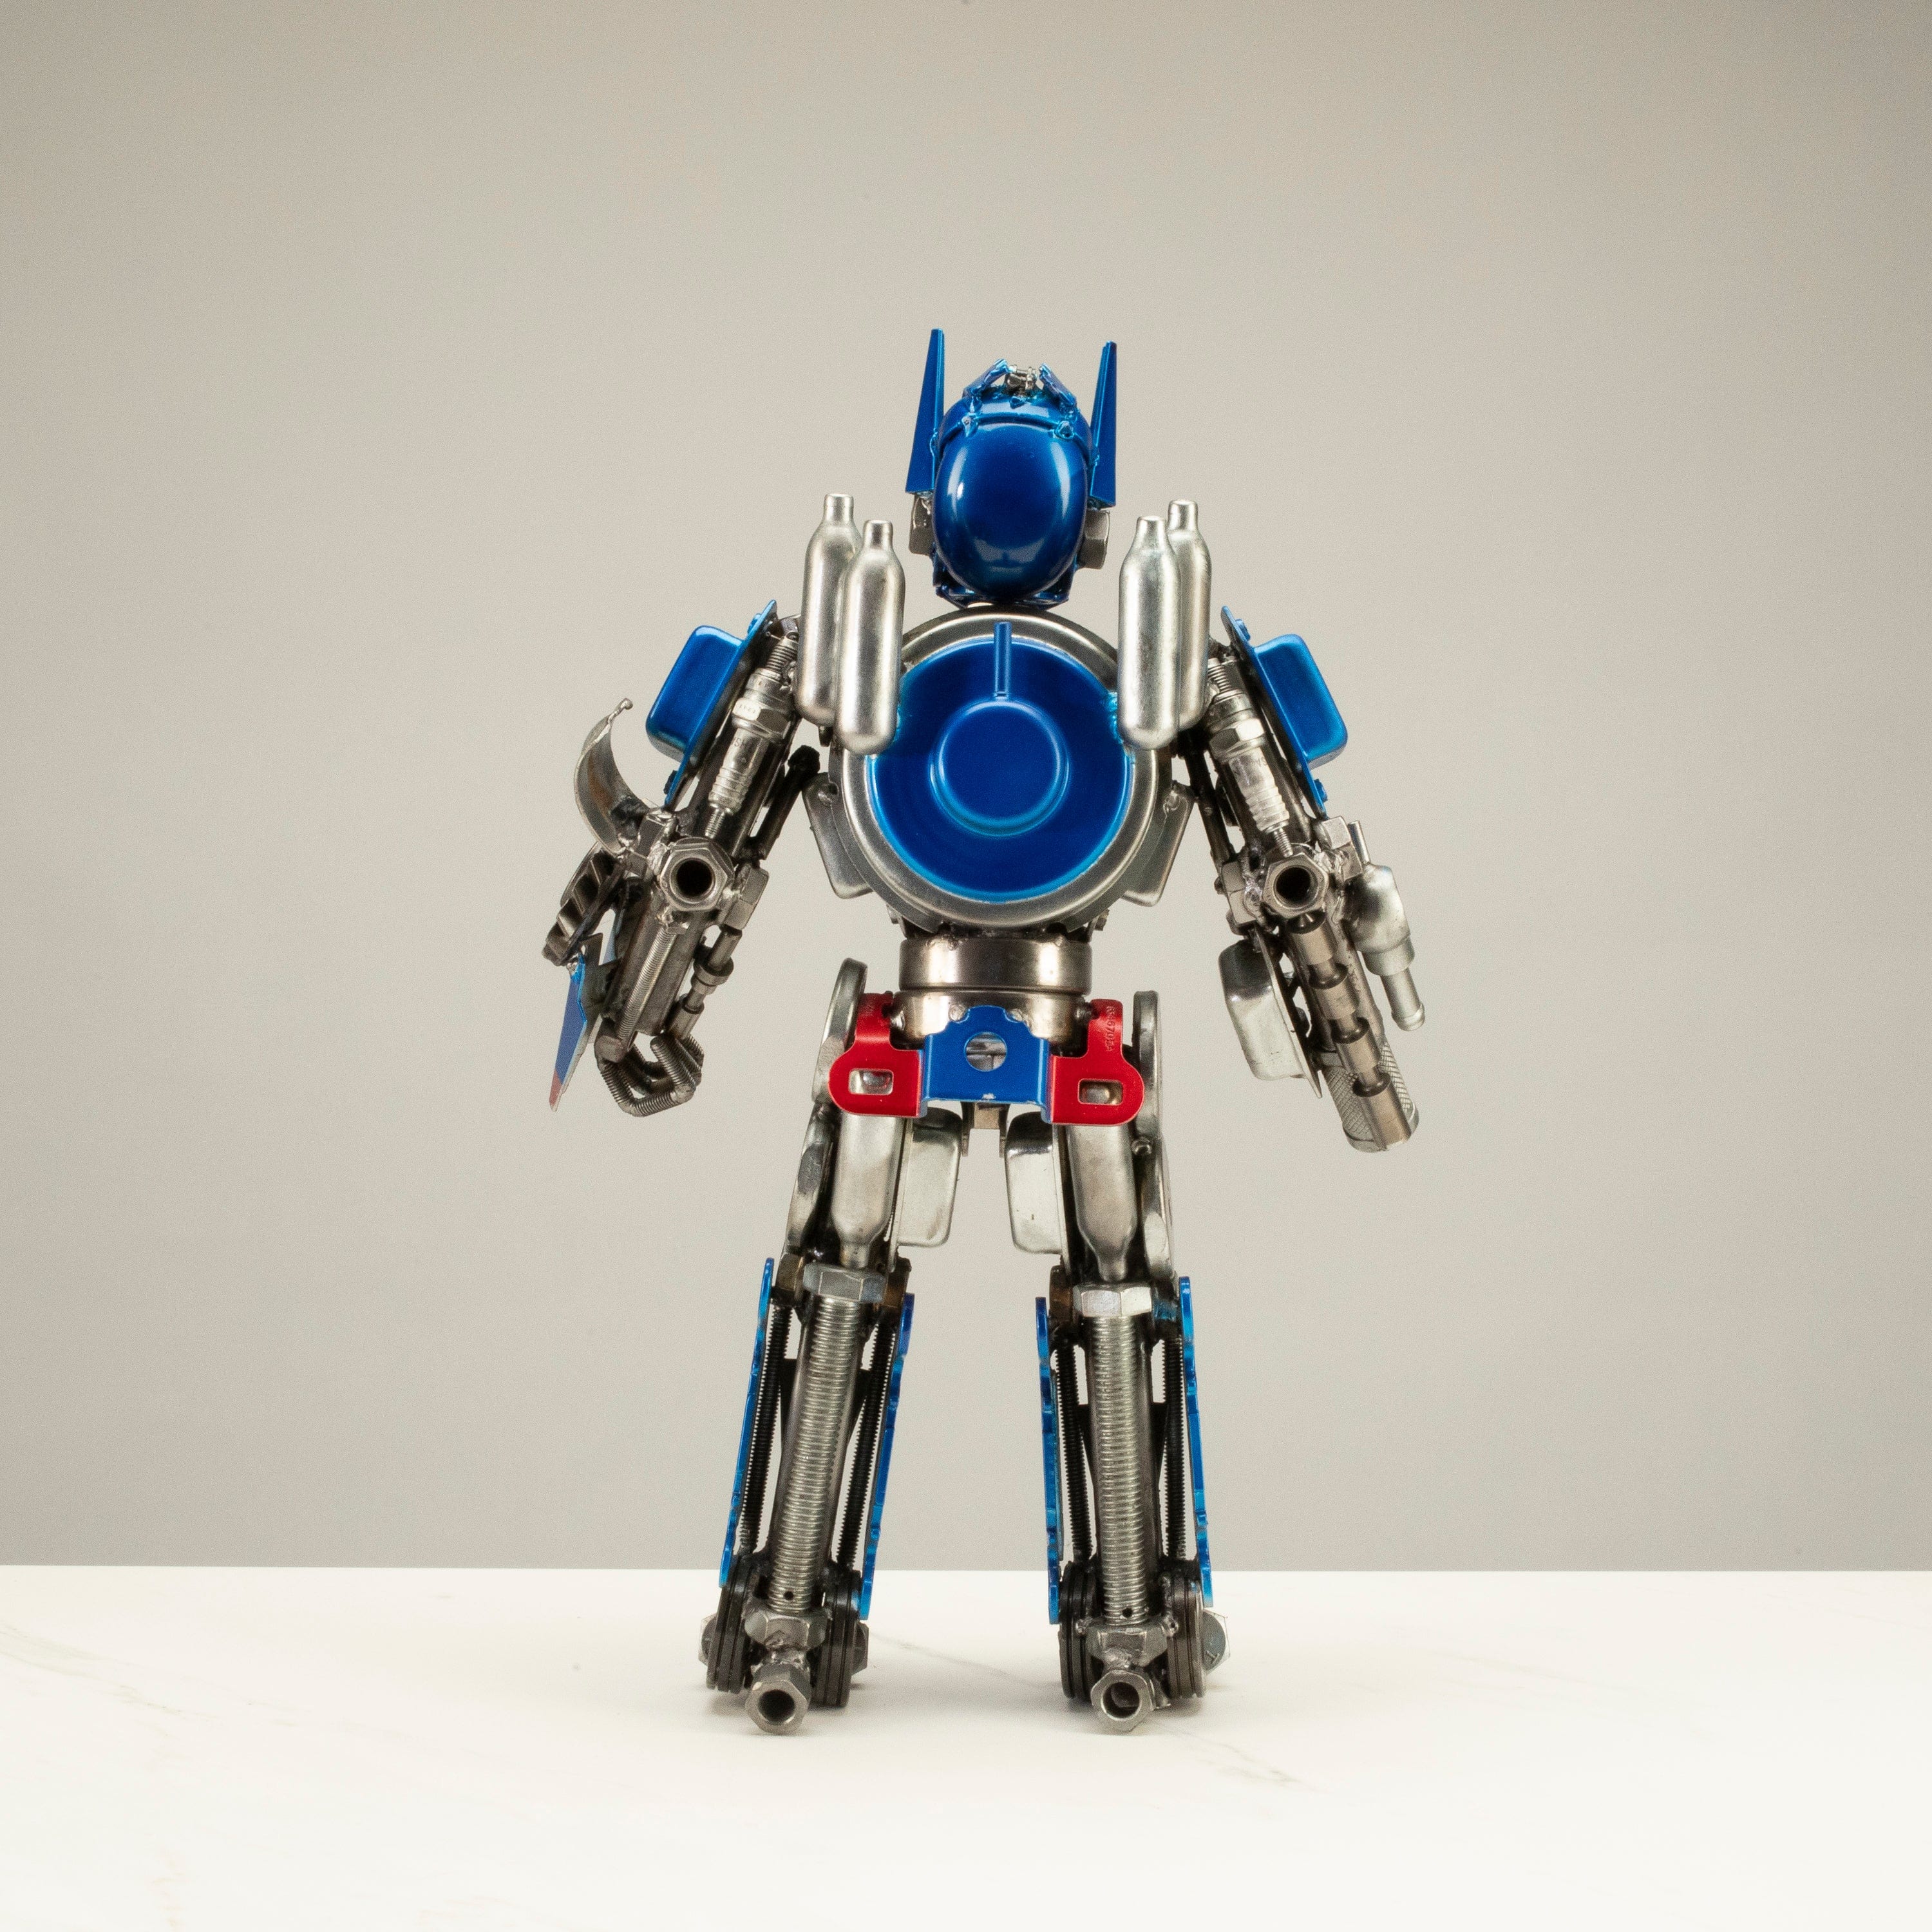 Kalifano Recycled Metal Art 16" Optimus Prime Inspired Recycled Metal Art Sculpture RMS-OP41-S